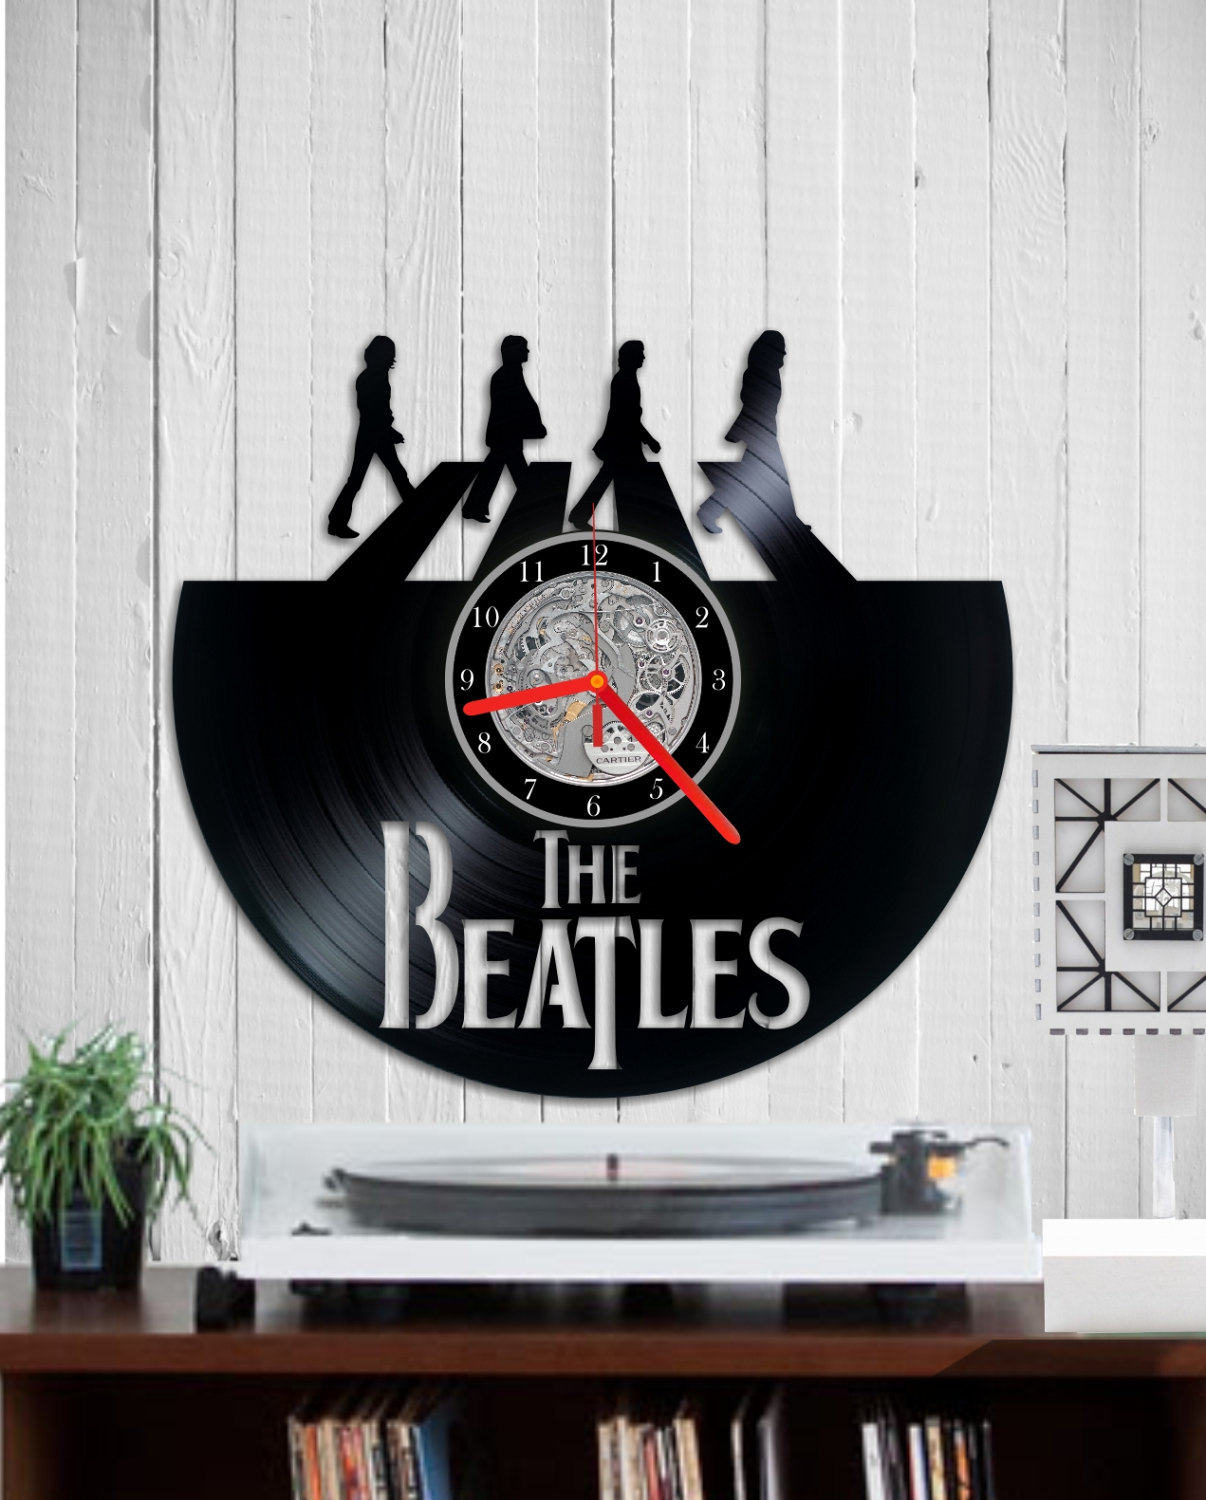 The Beatles Vinyl Wall Clock Made of Vinyl Record Original gift 2476 